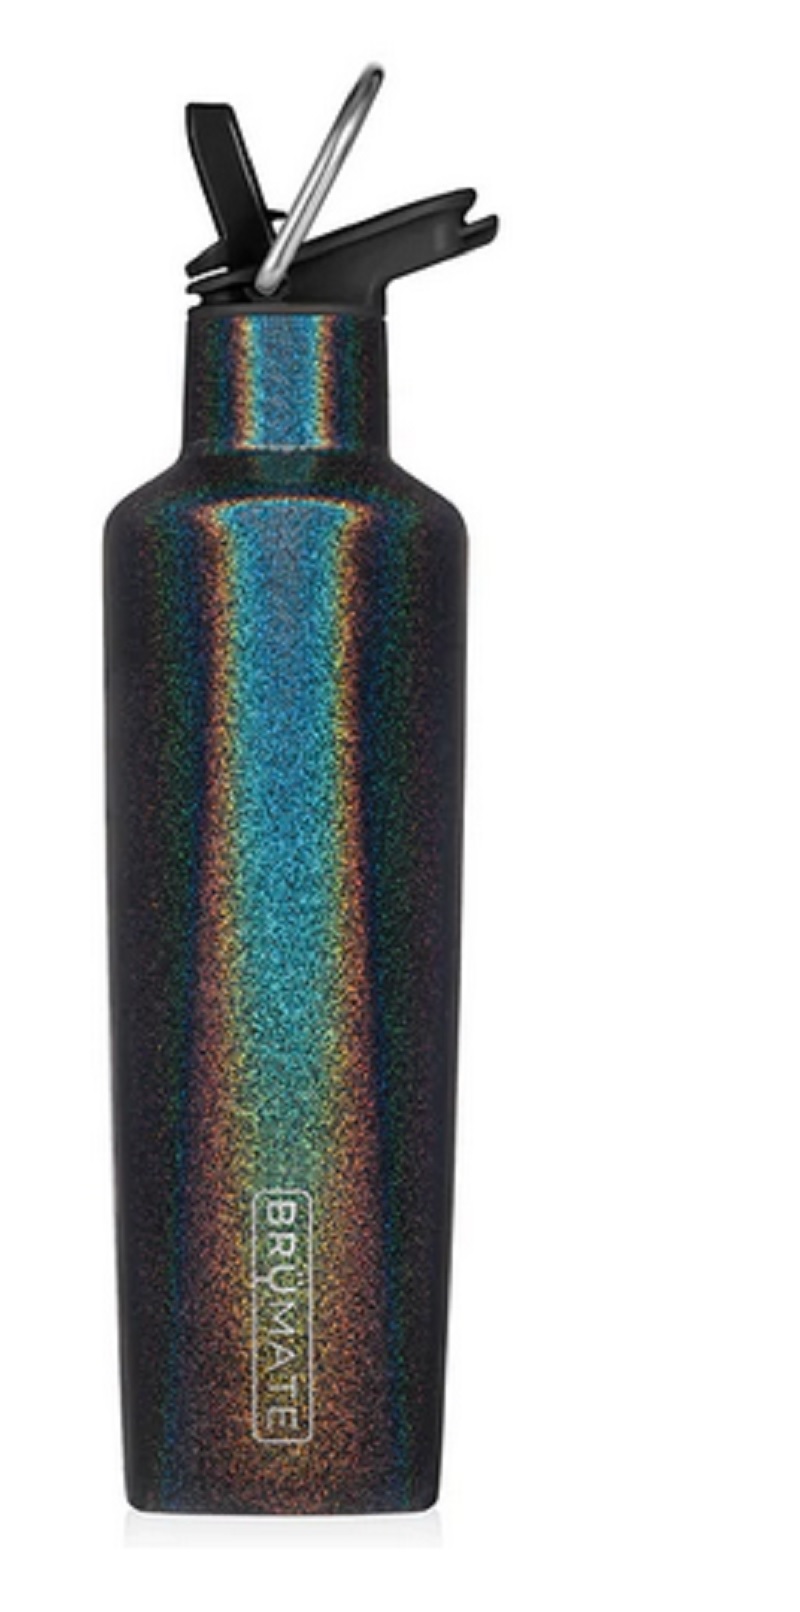 ReHydration Mini 16oz Stainless Steel Water Bottle